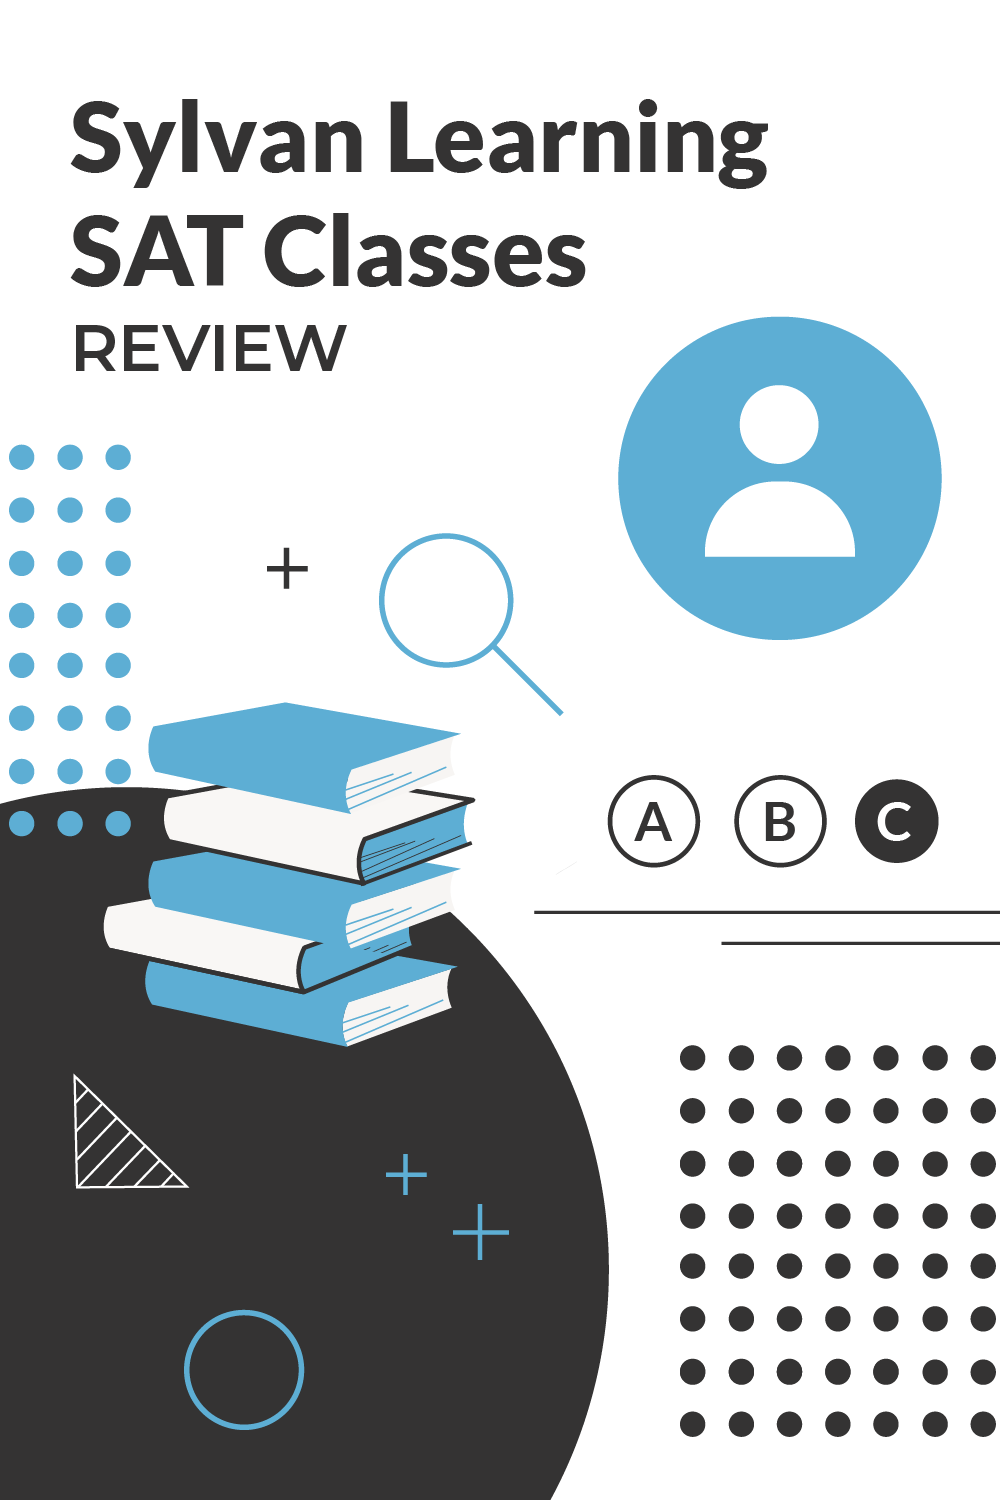 sylvan learning SAT classes review pinterest image